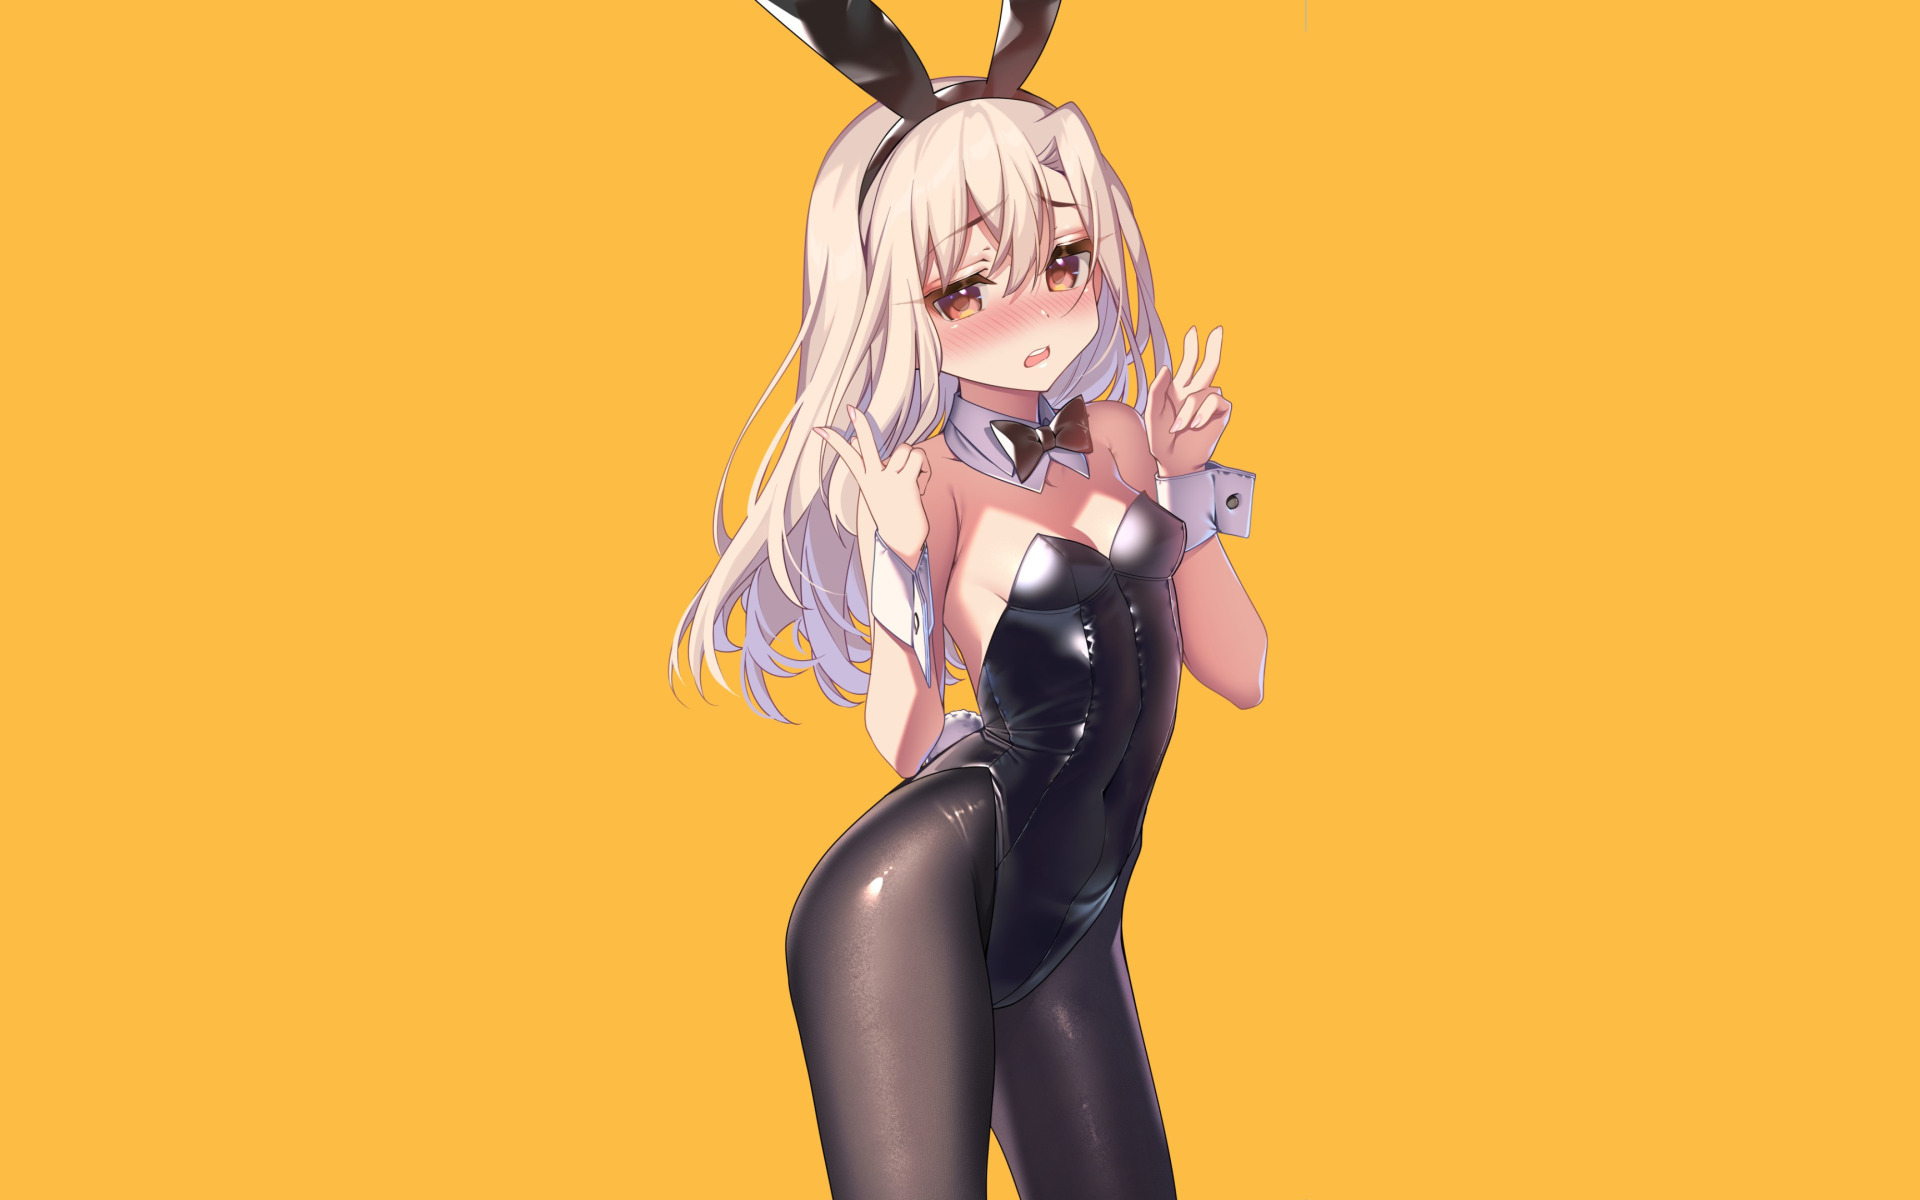 Download wallpaper kawaii, Girl, rabbit, anime, pretty, cute, petite, loli,  bunny girl, Bunny, usagi, section seinen in resolution 1920x1200